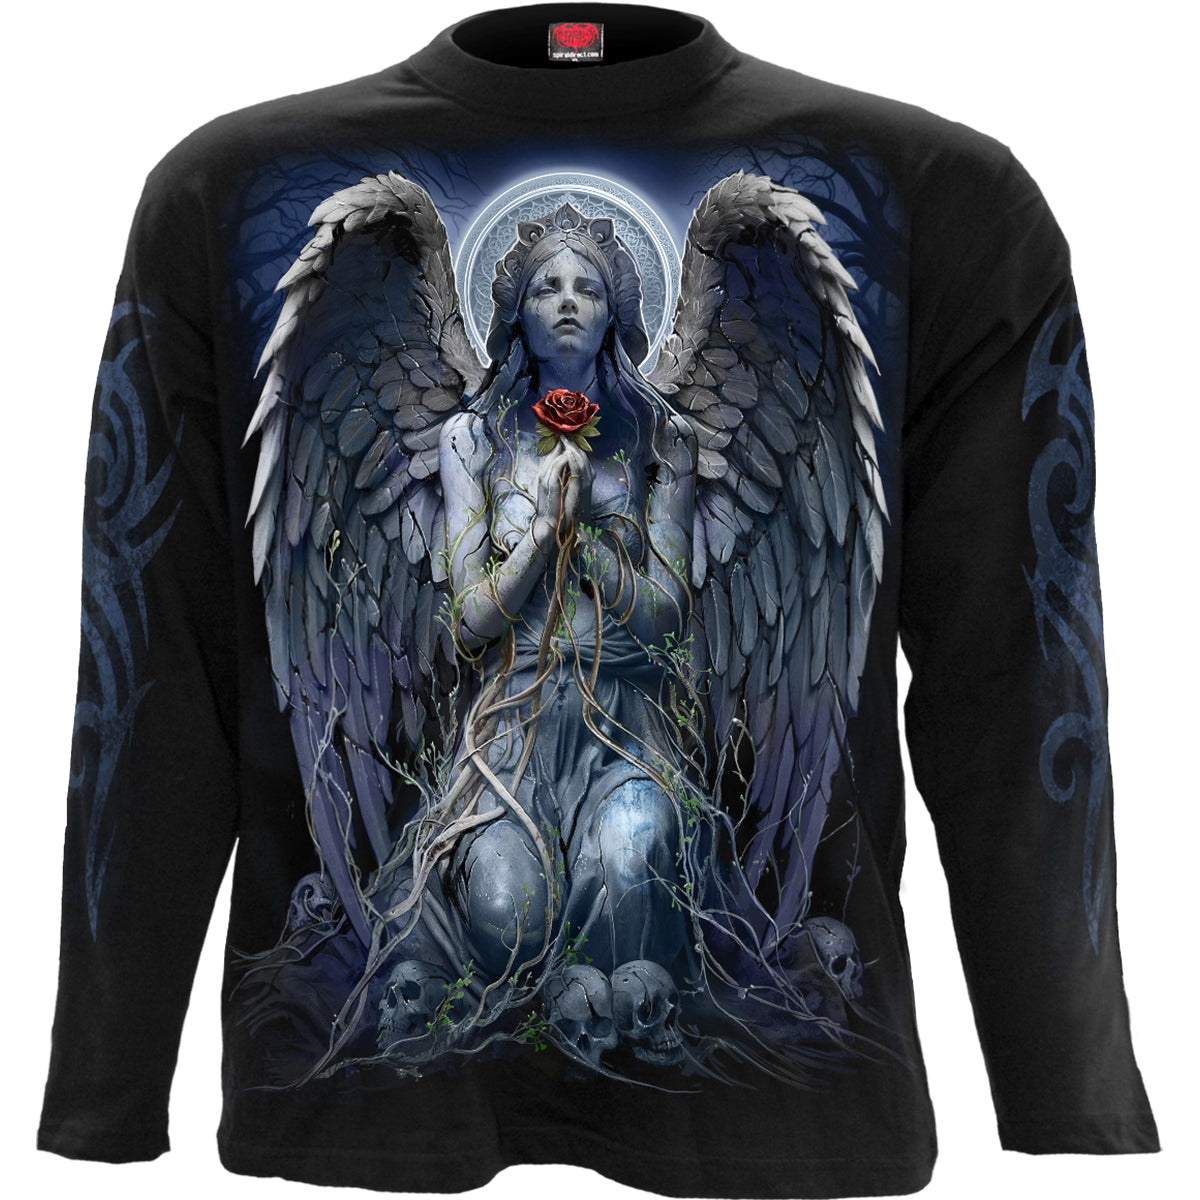 GRIEVING ANGEL - Longsleeve T-Shirt Black